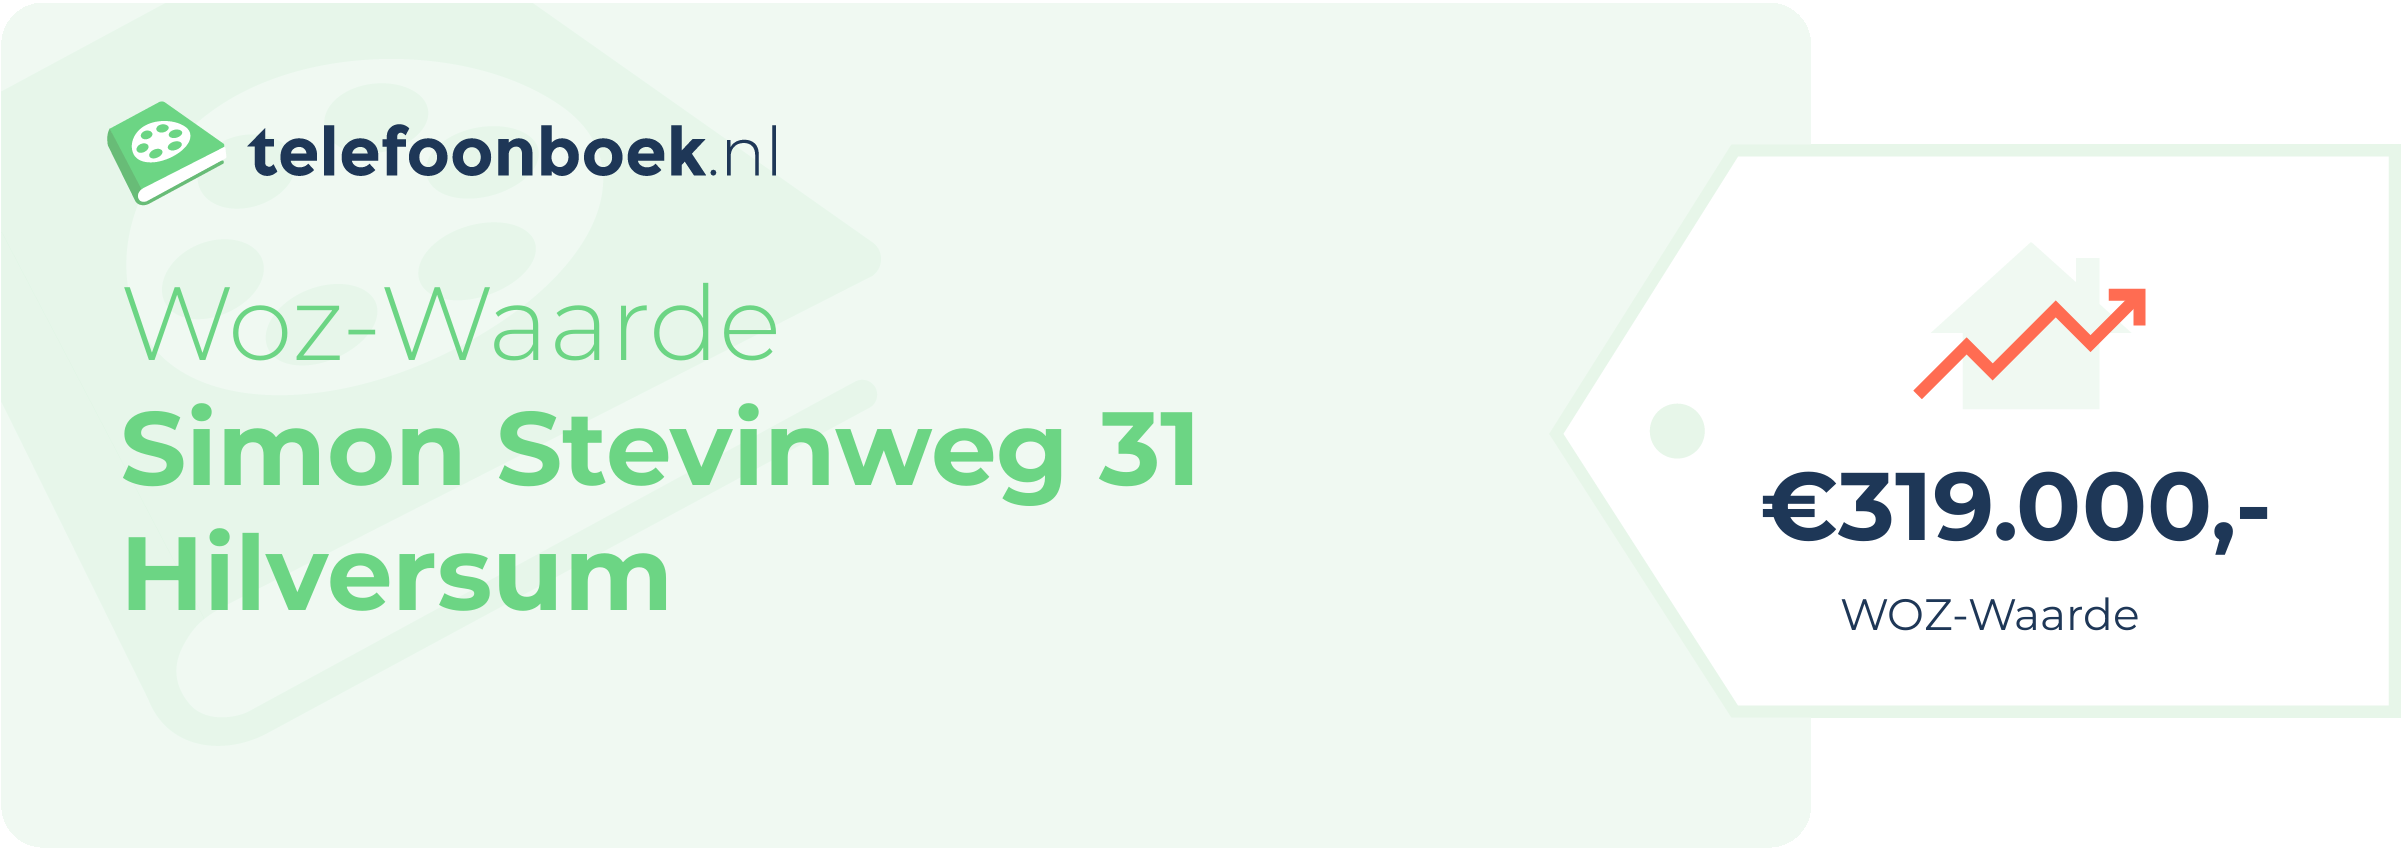 WOZ-waarde Simon Stevinweg 31 Hilversum